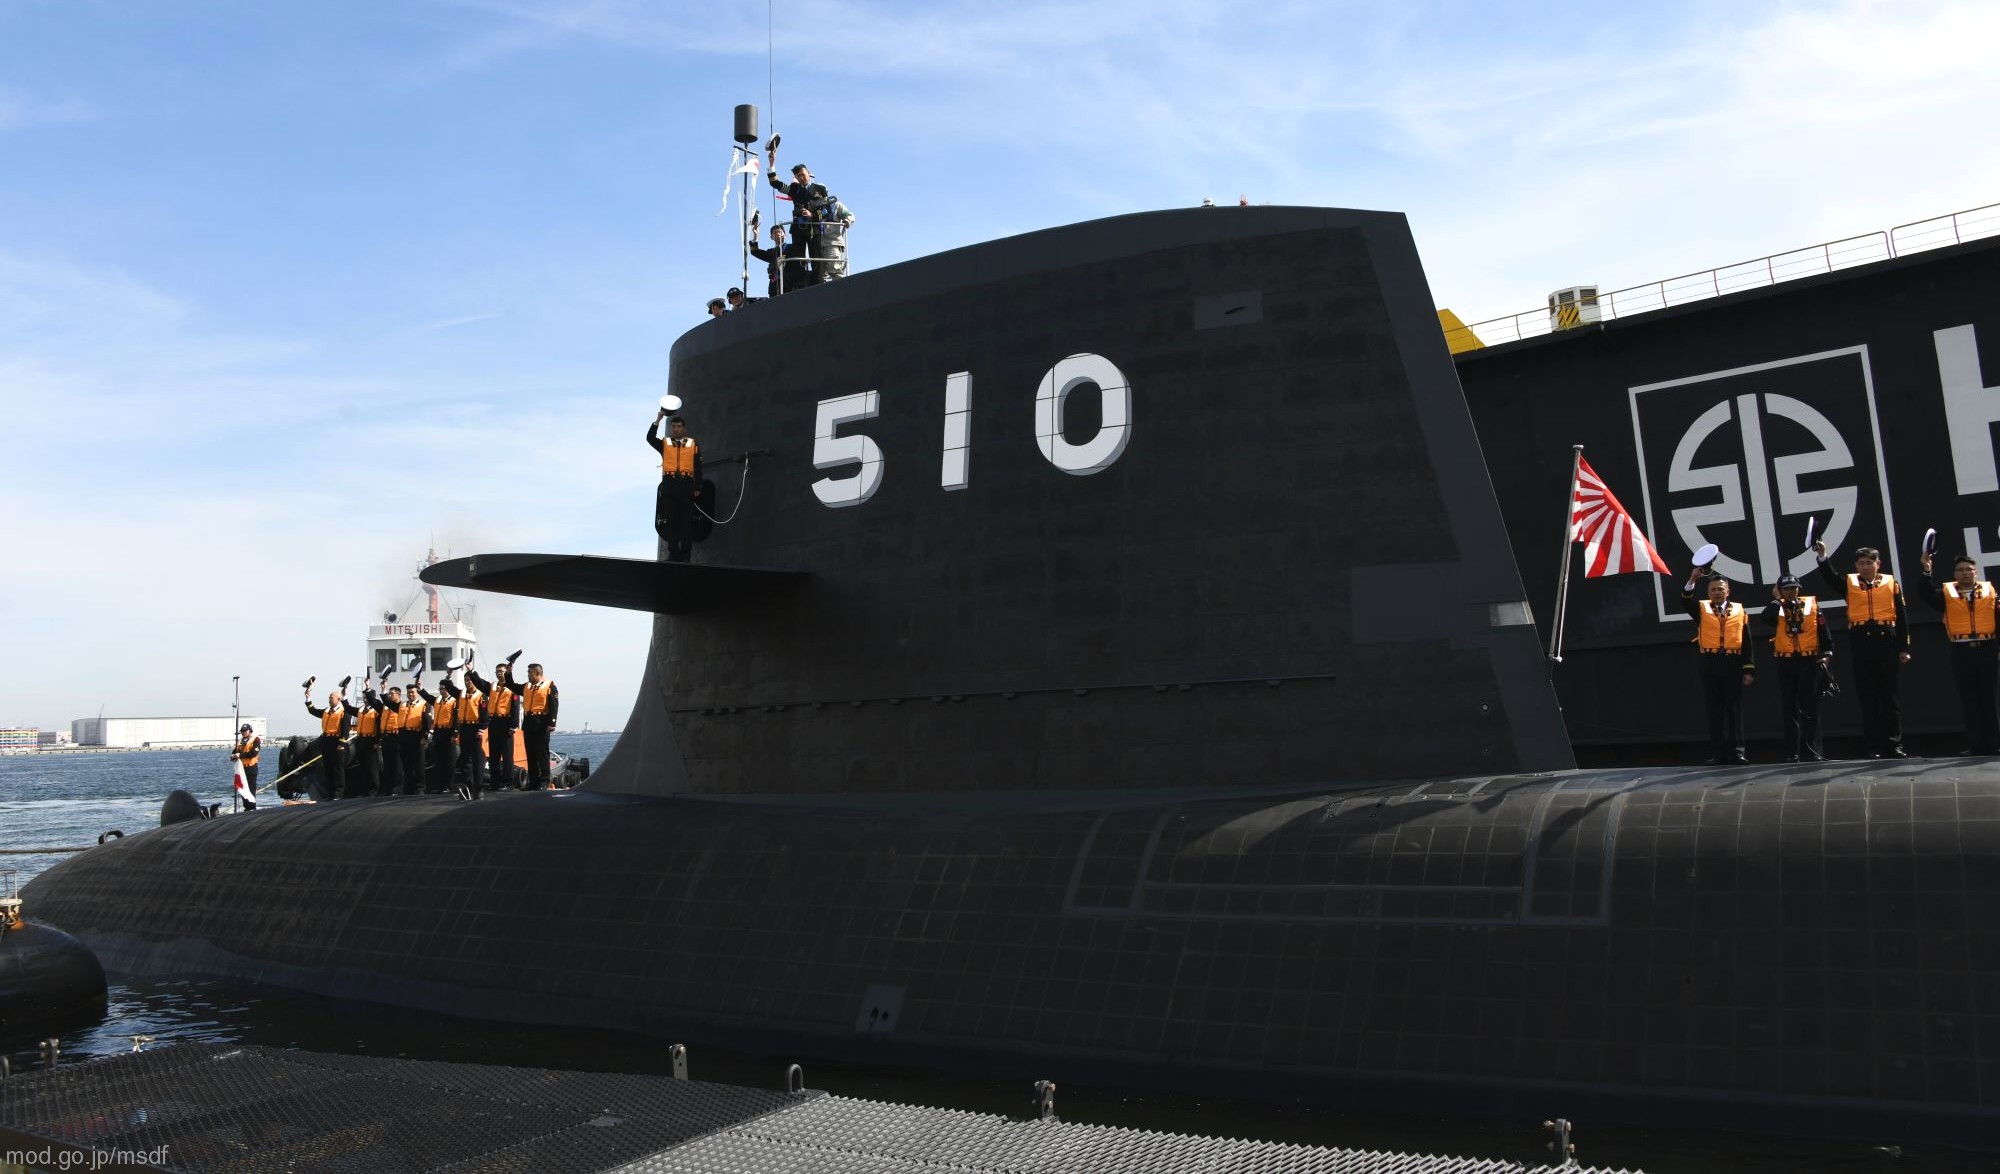 ss-510 js shoryu 16ss soryu class attack submarine ssk japan maritime self defense force jmsdf 07